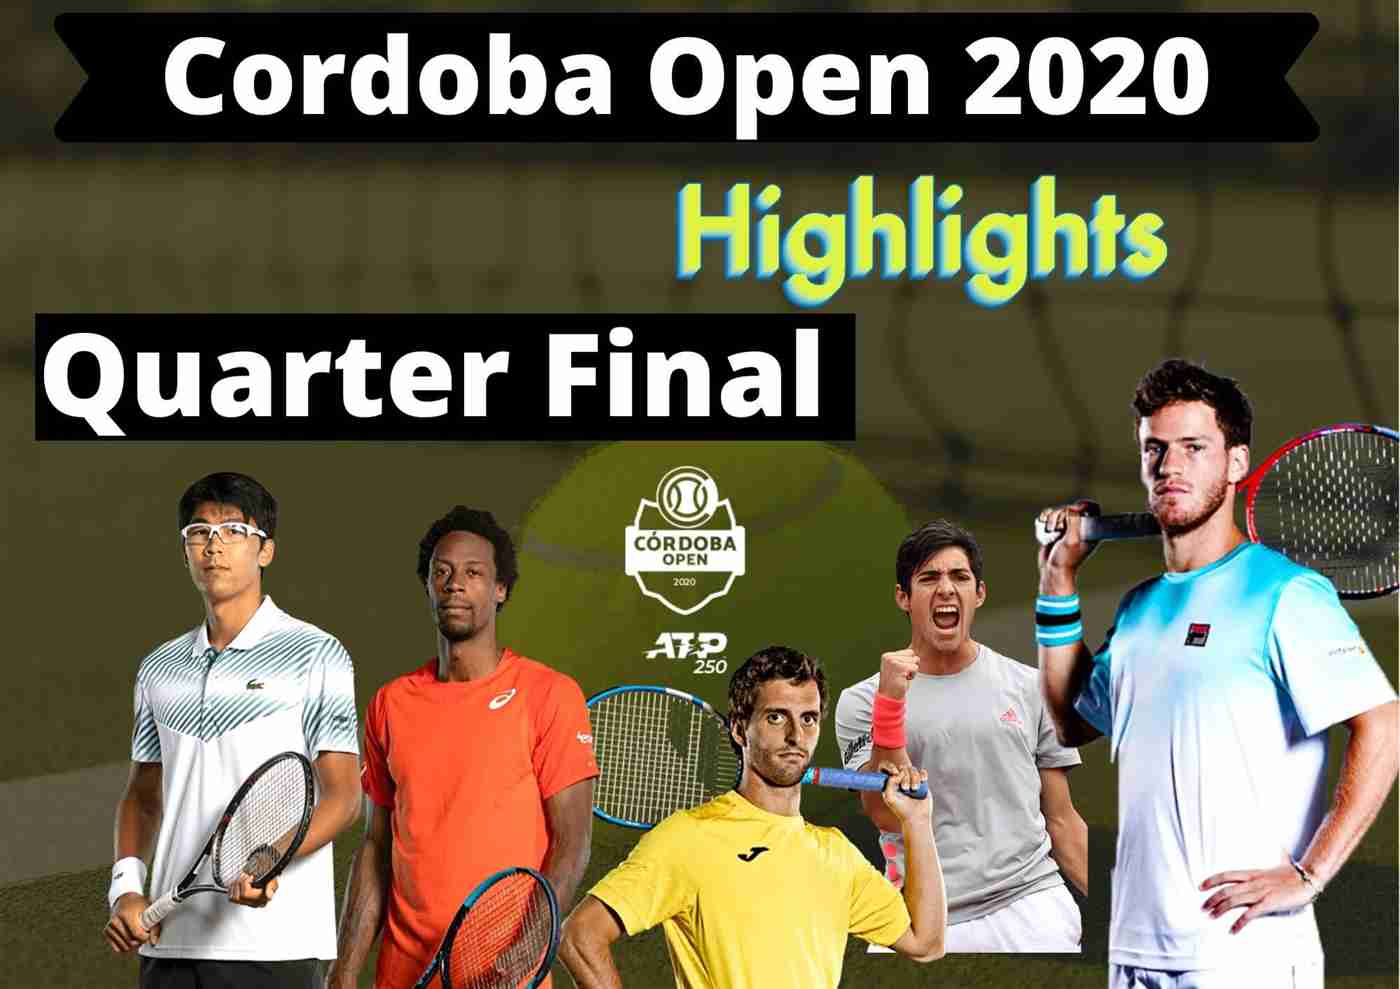 P Cuevas Vs C Garin QuarterFinal Highlights 2020 Cordoba Open